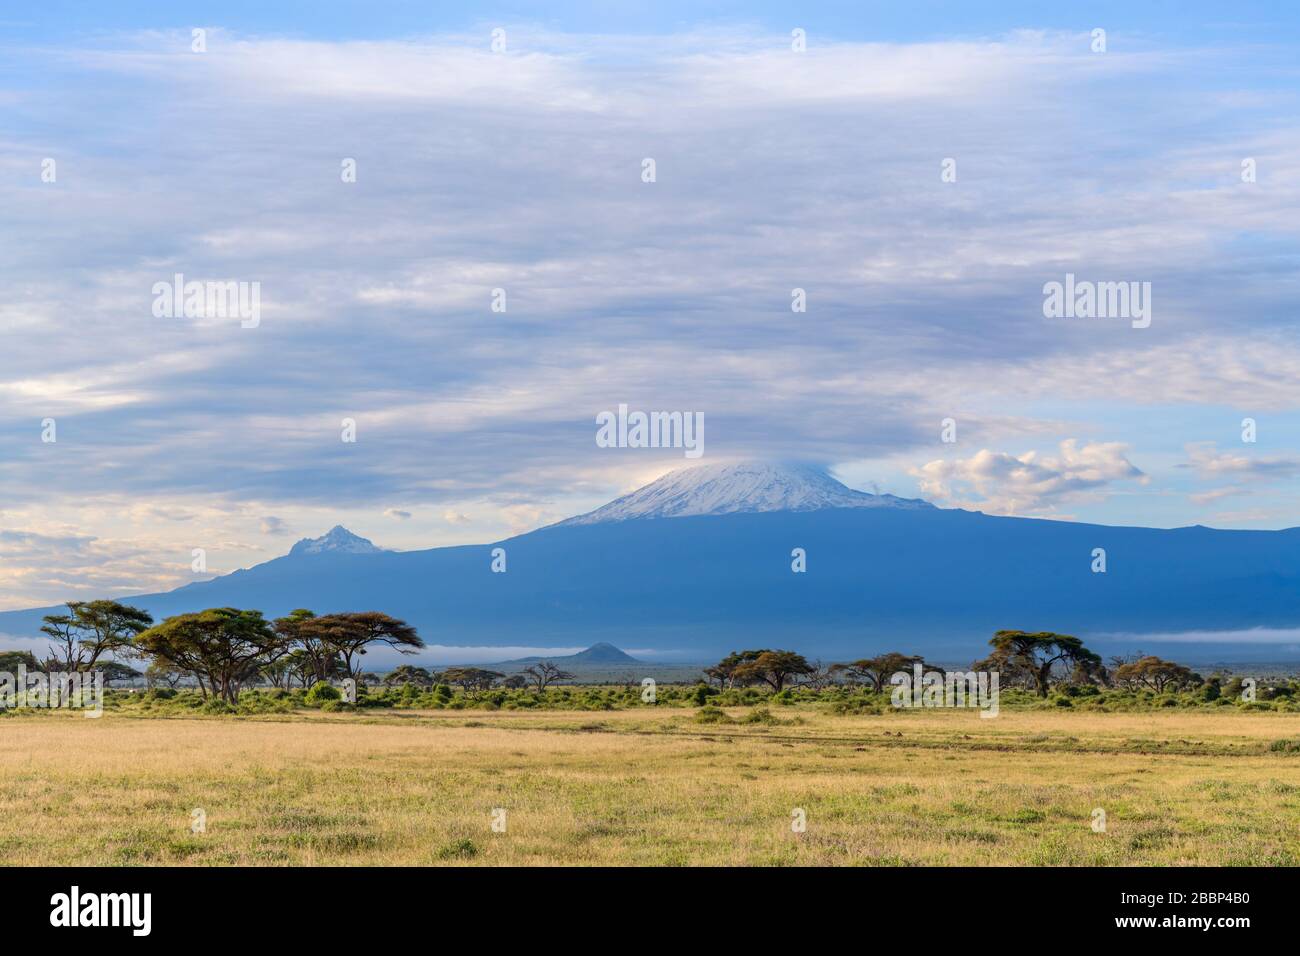 Mount Kilimanjaro behind, Amboseli National Park, Kenya, Africa Stock Photo